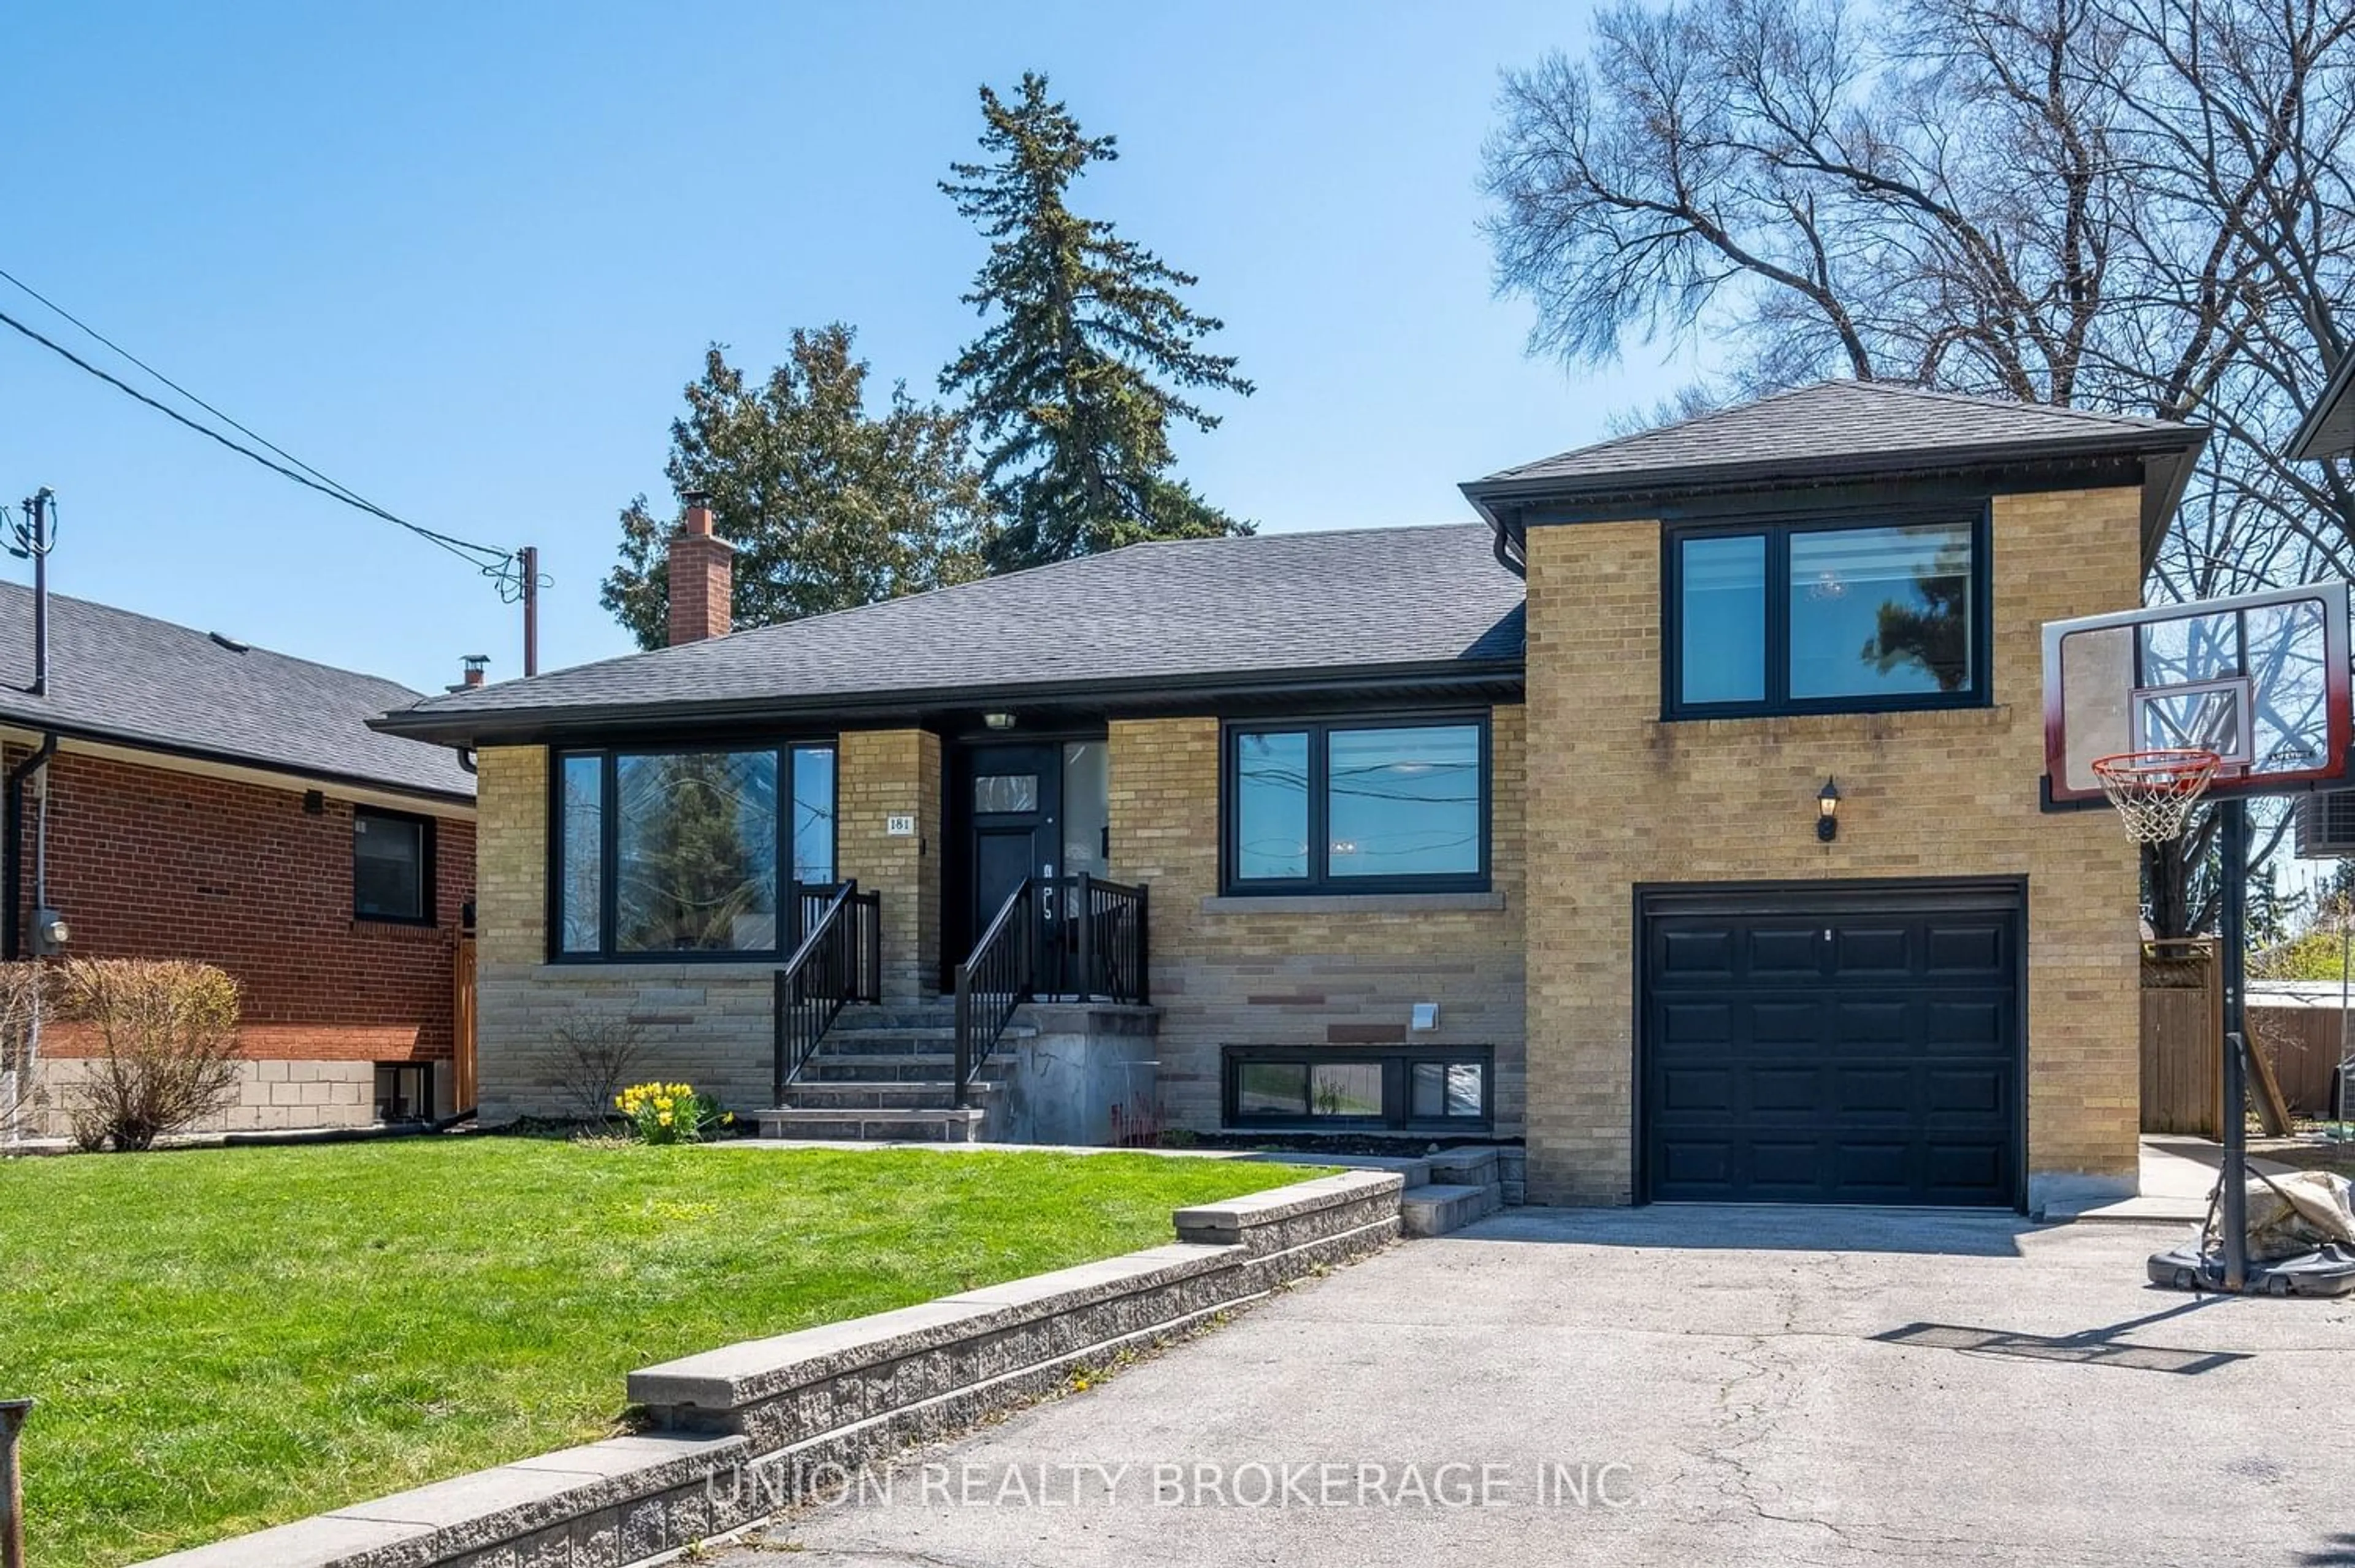 Home with brick exterior material for 181 Brighton Ave, Toronto Ontario M3H 4E3